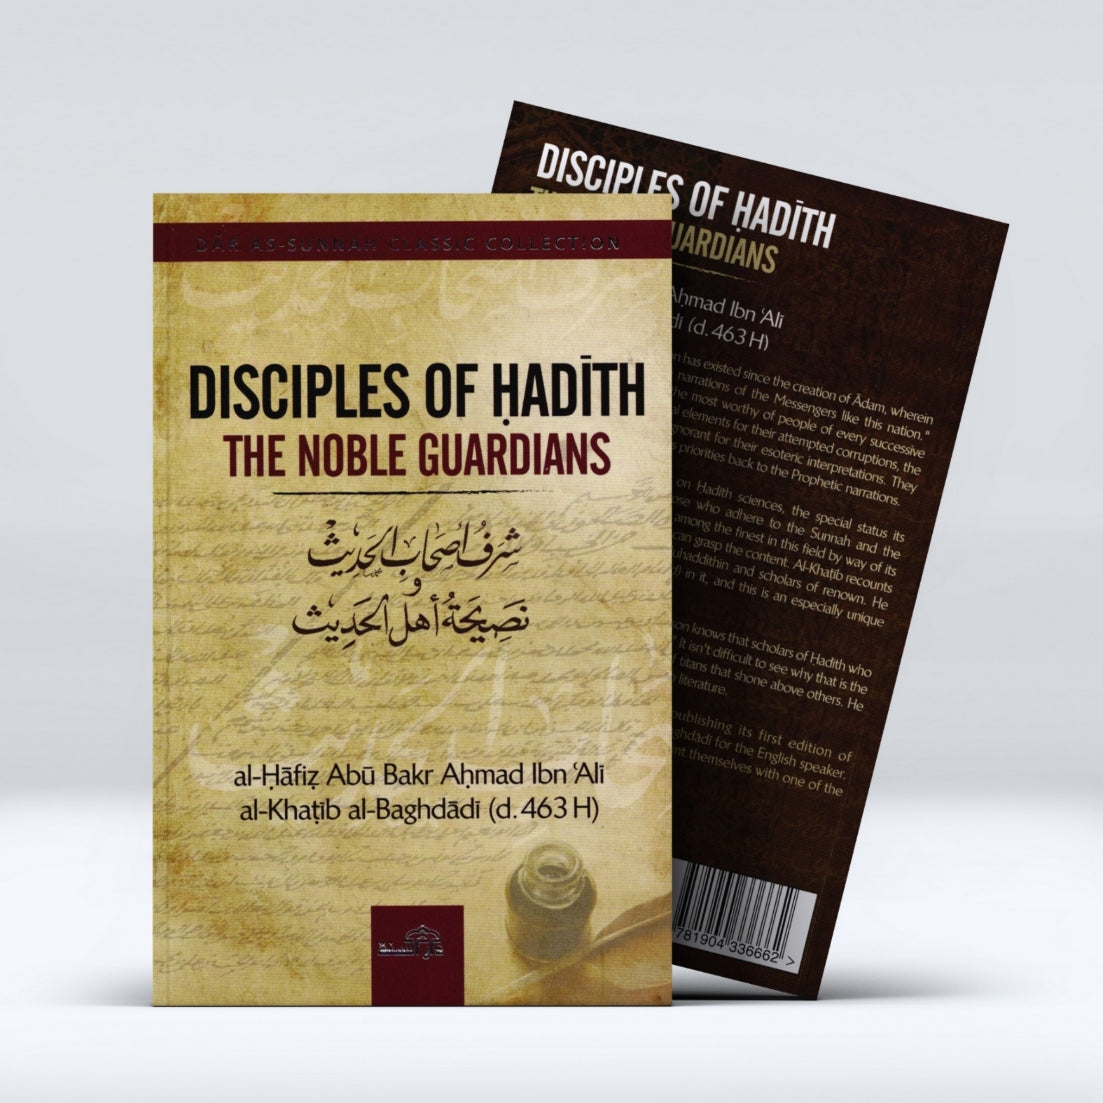 Disciples of Hadith: The Noble Guardians by Imam Al-Khatib al-Baghdadi